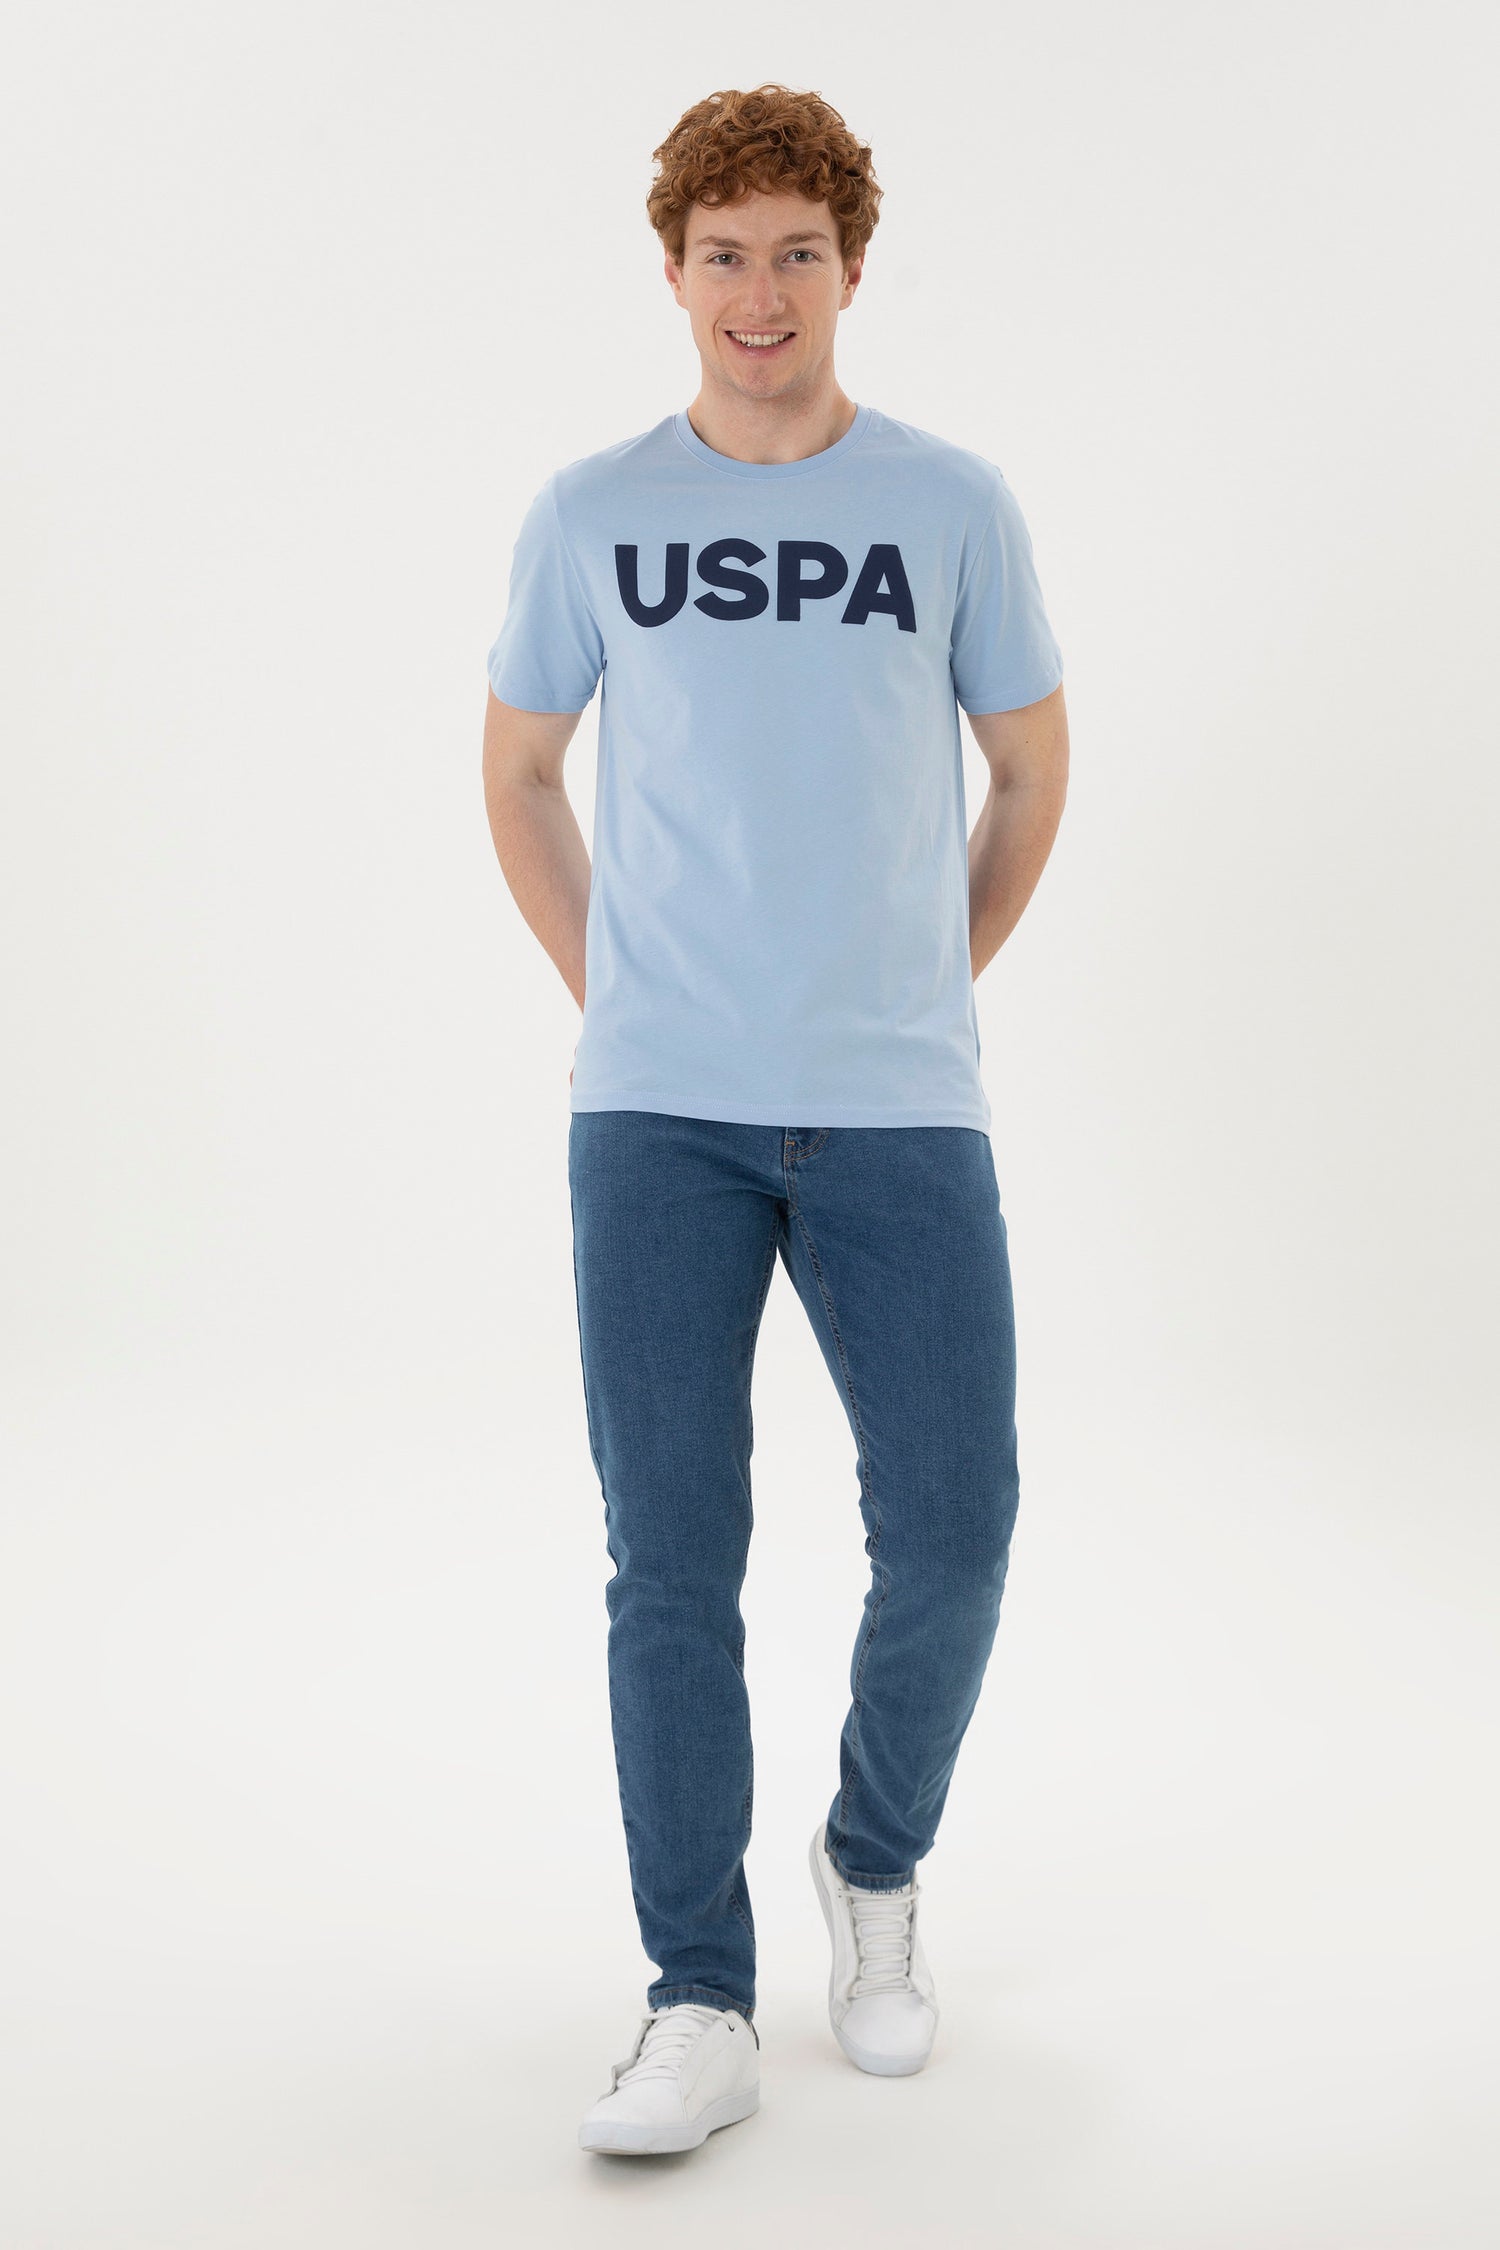 Round Neck T-Shirt With Uspa Logo_G081SZ0110 1795459_VR003_04